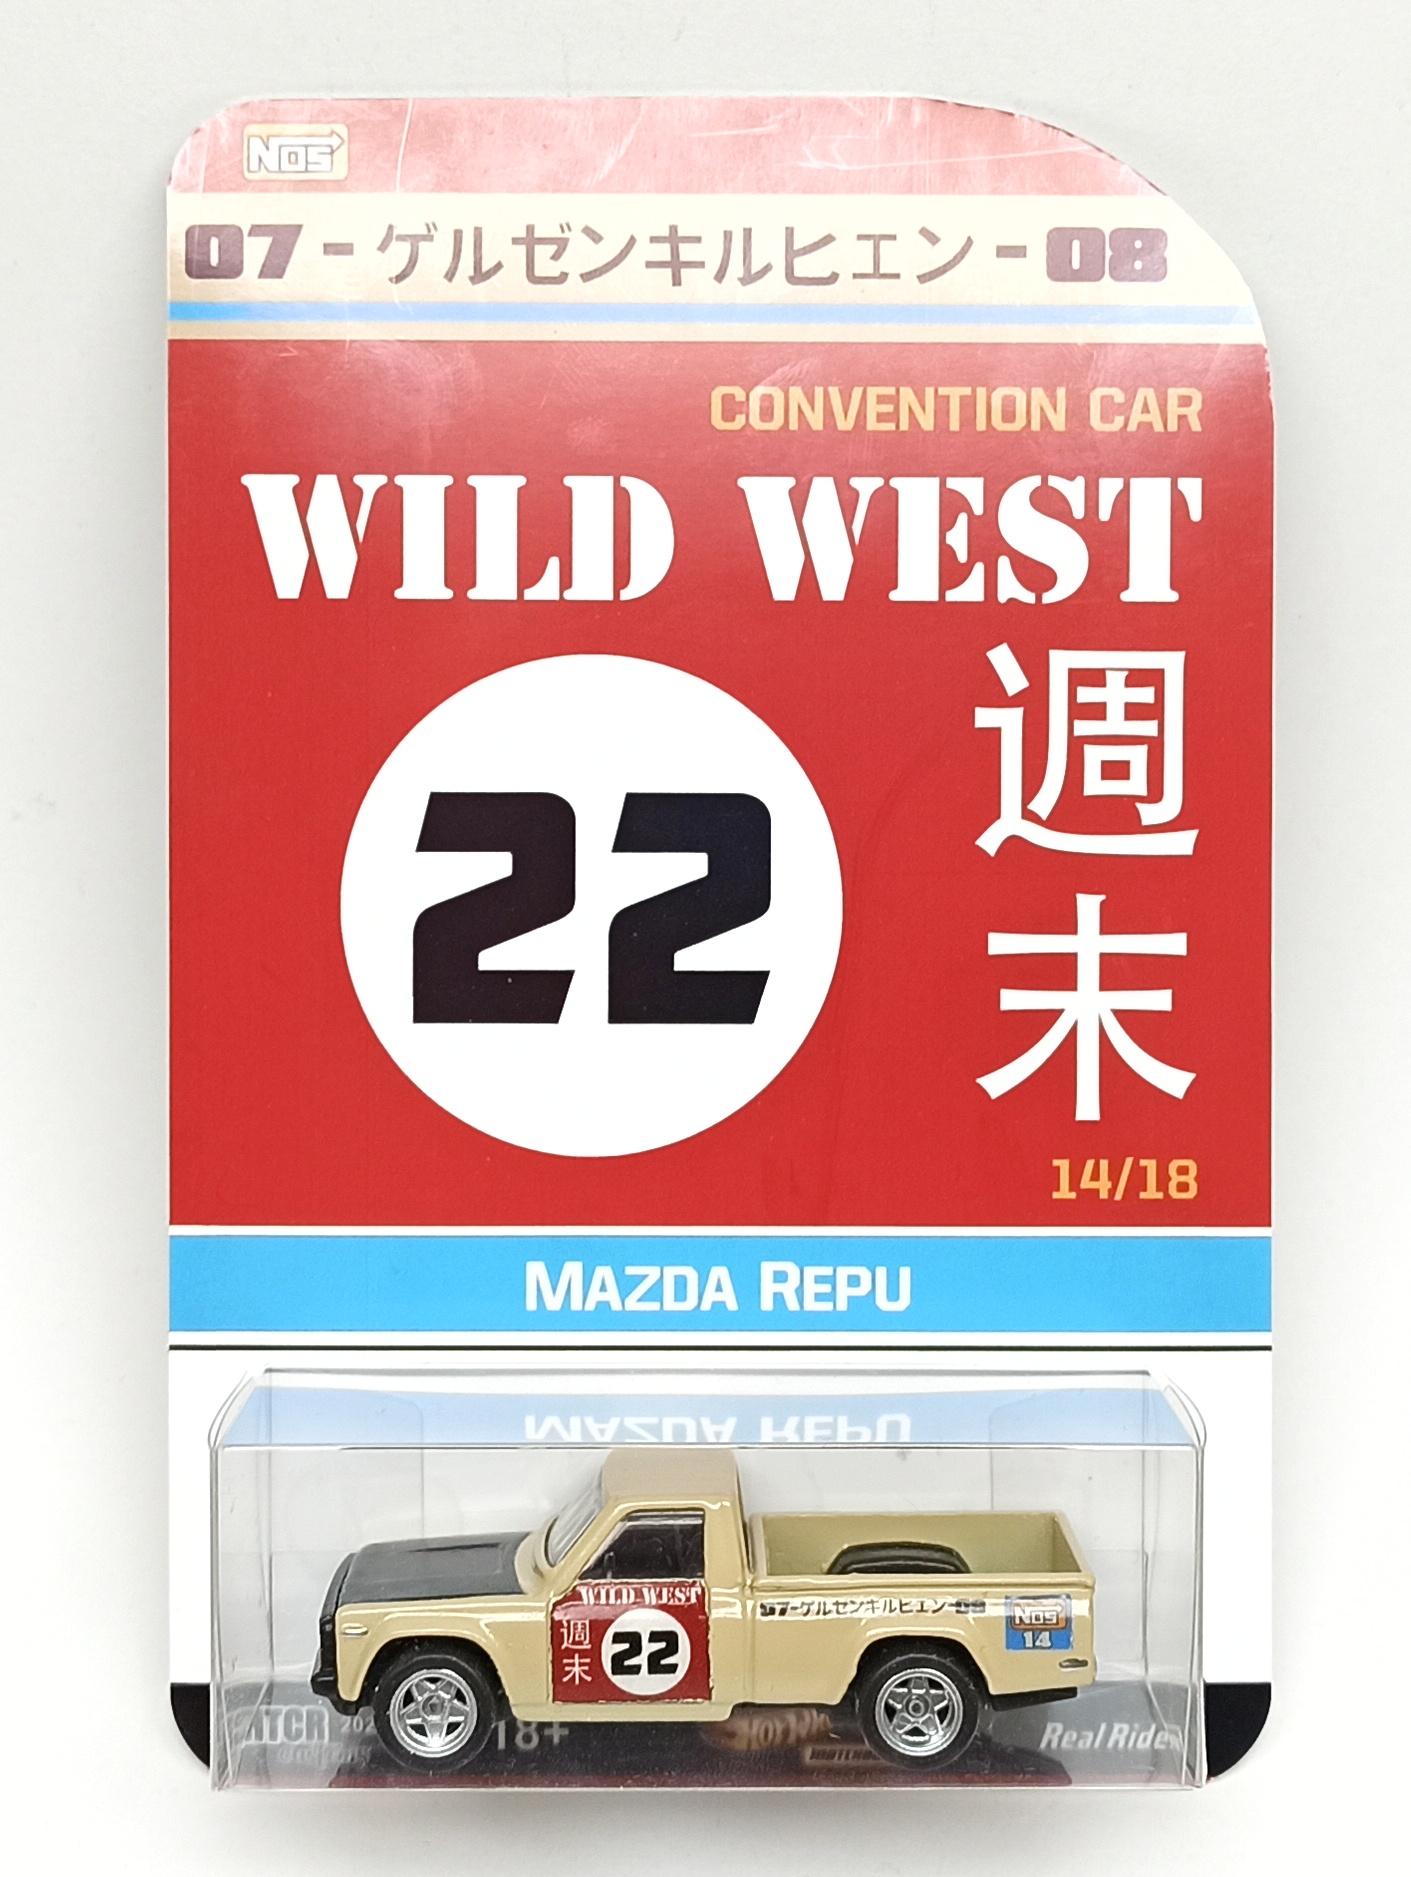 Hot Wheels Mazda Repu 2022 WWW Wild West Convention Car (1 of 18) light brown